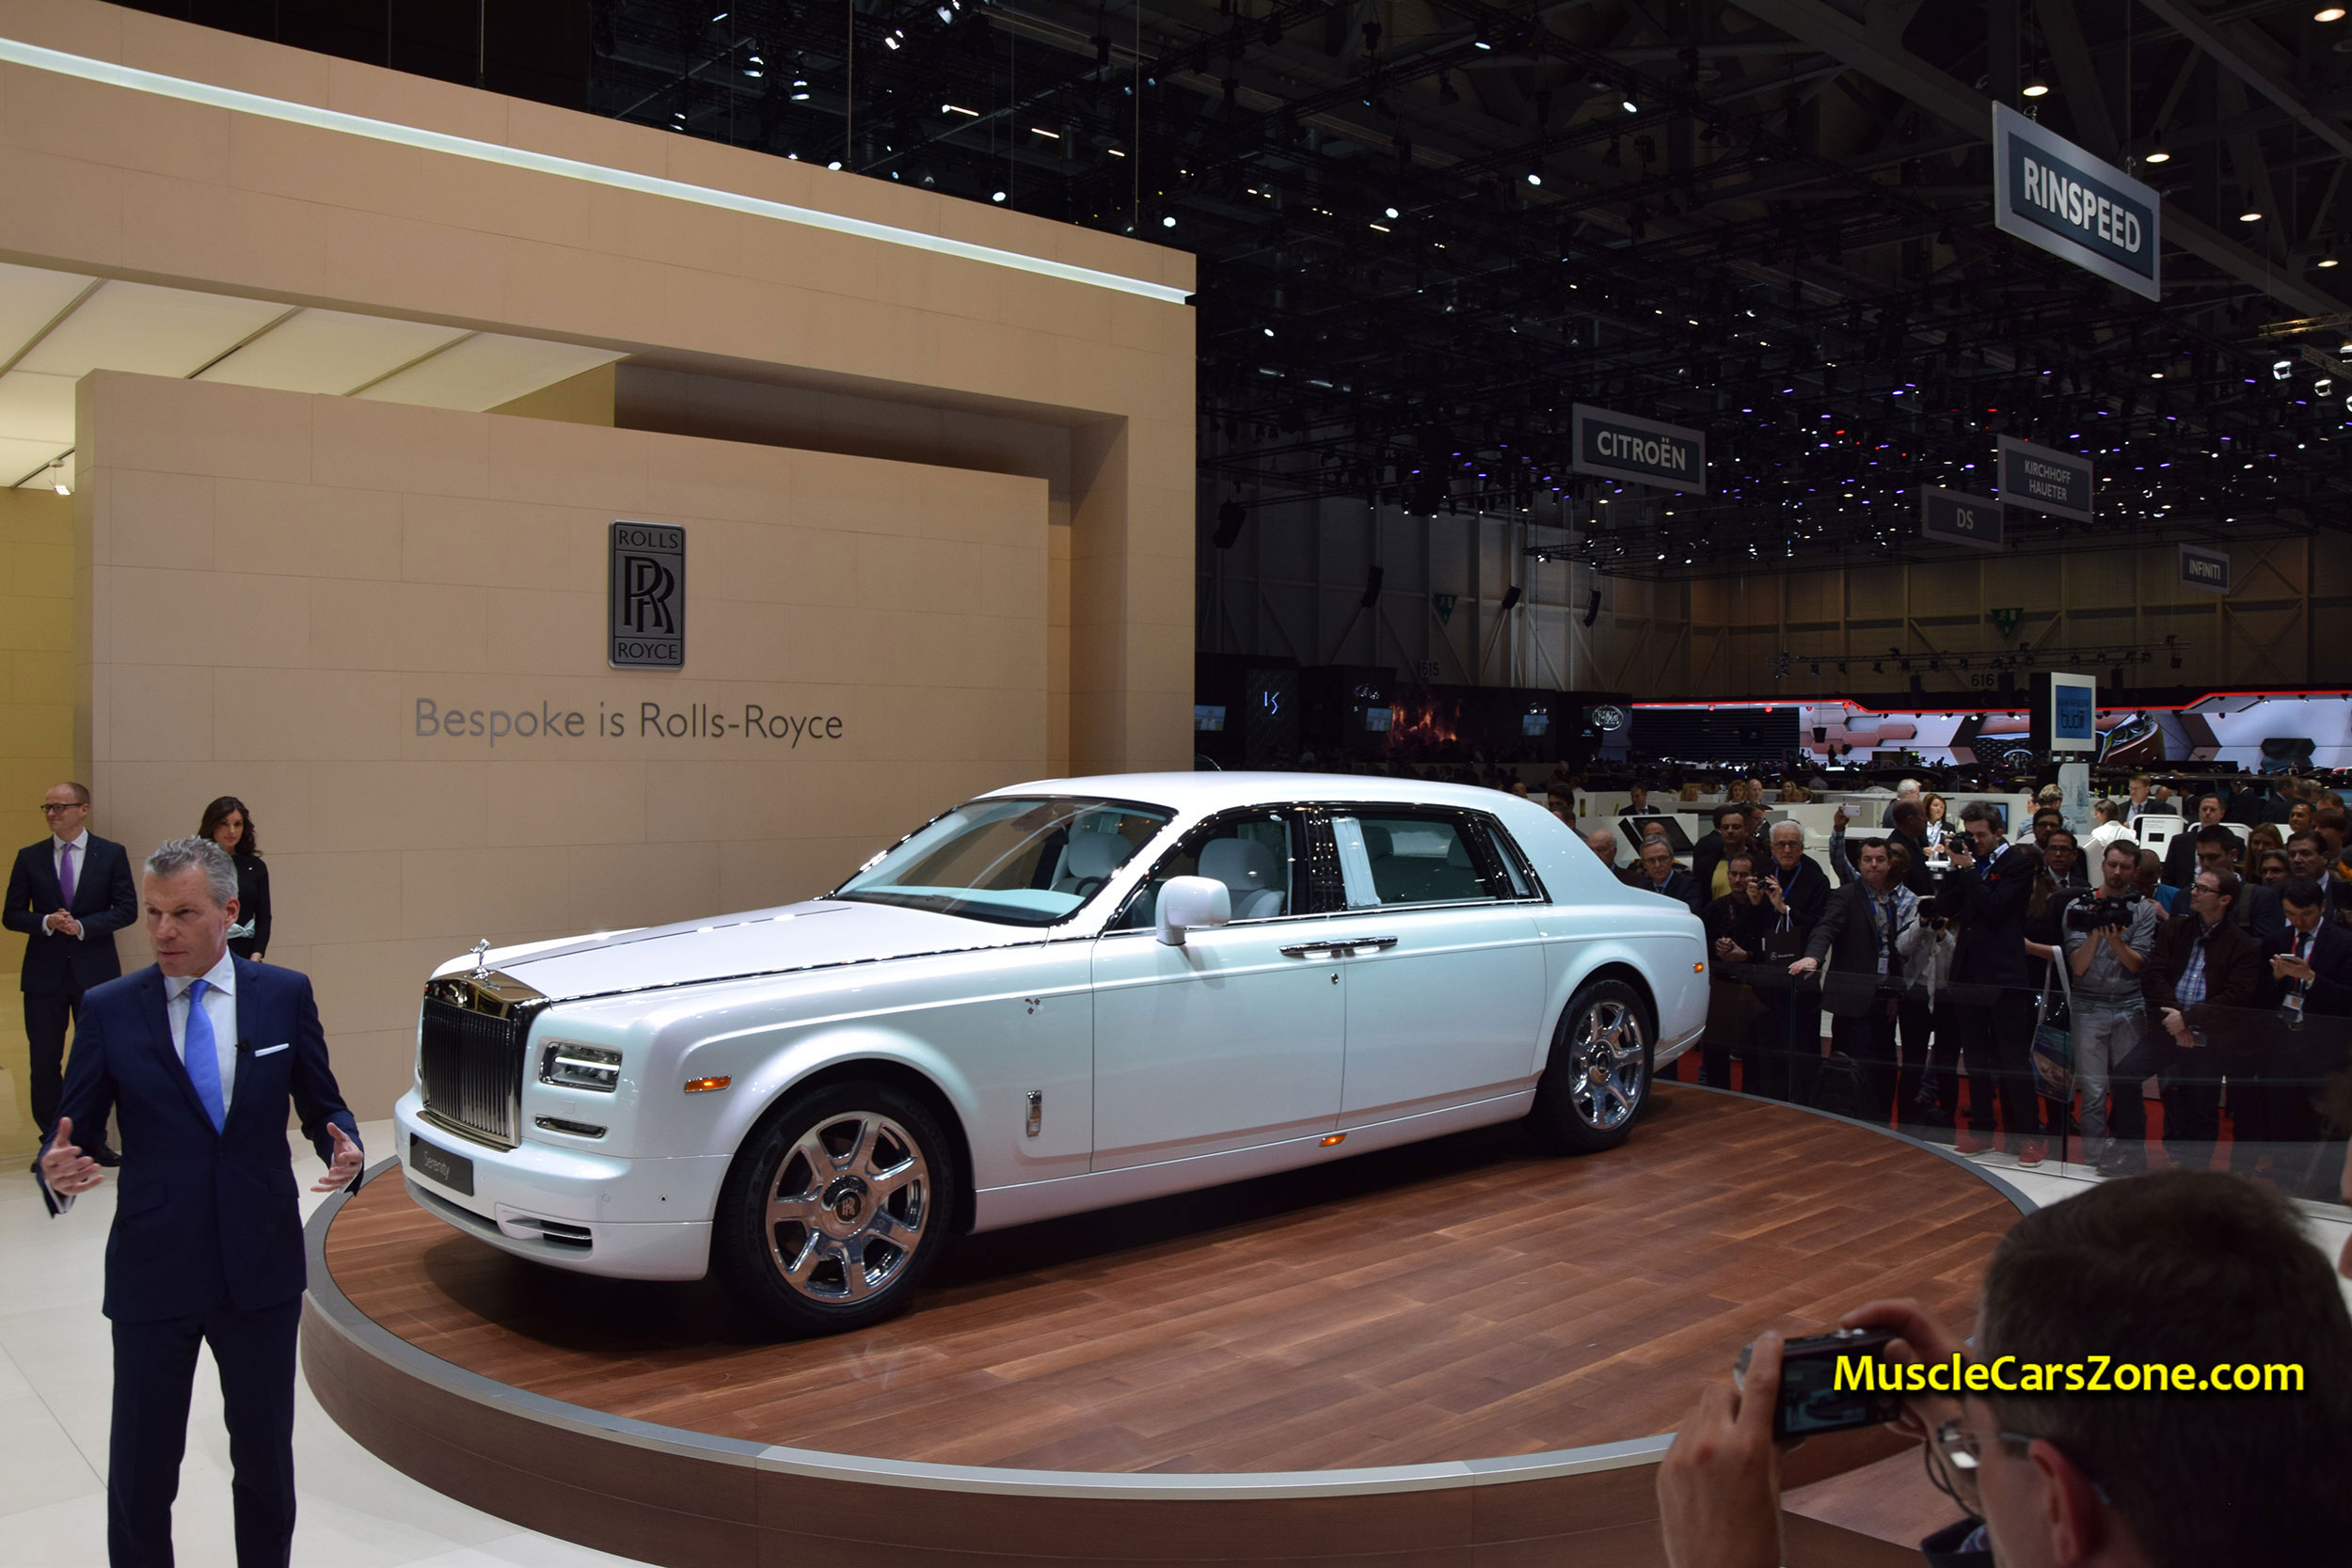 2015-Rolls-Royce-Press-Conference---The-New-Rolls-Royce-Serenity-22---2015-Geneva-Motor-Show-